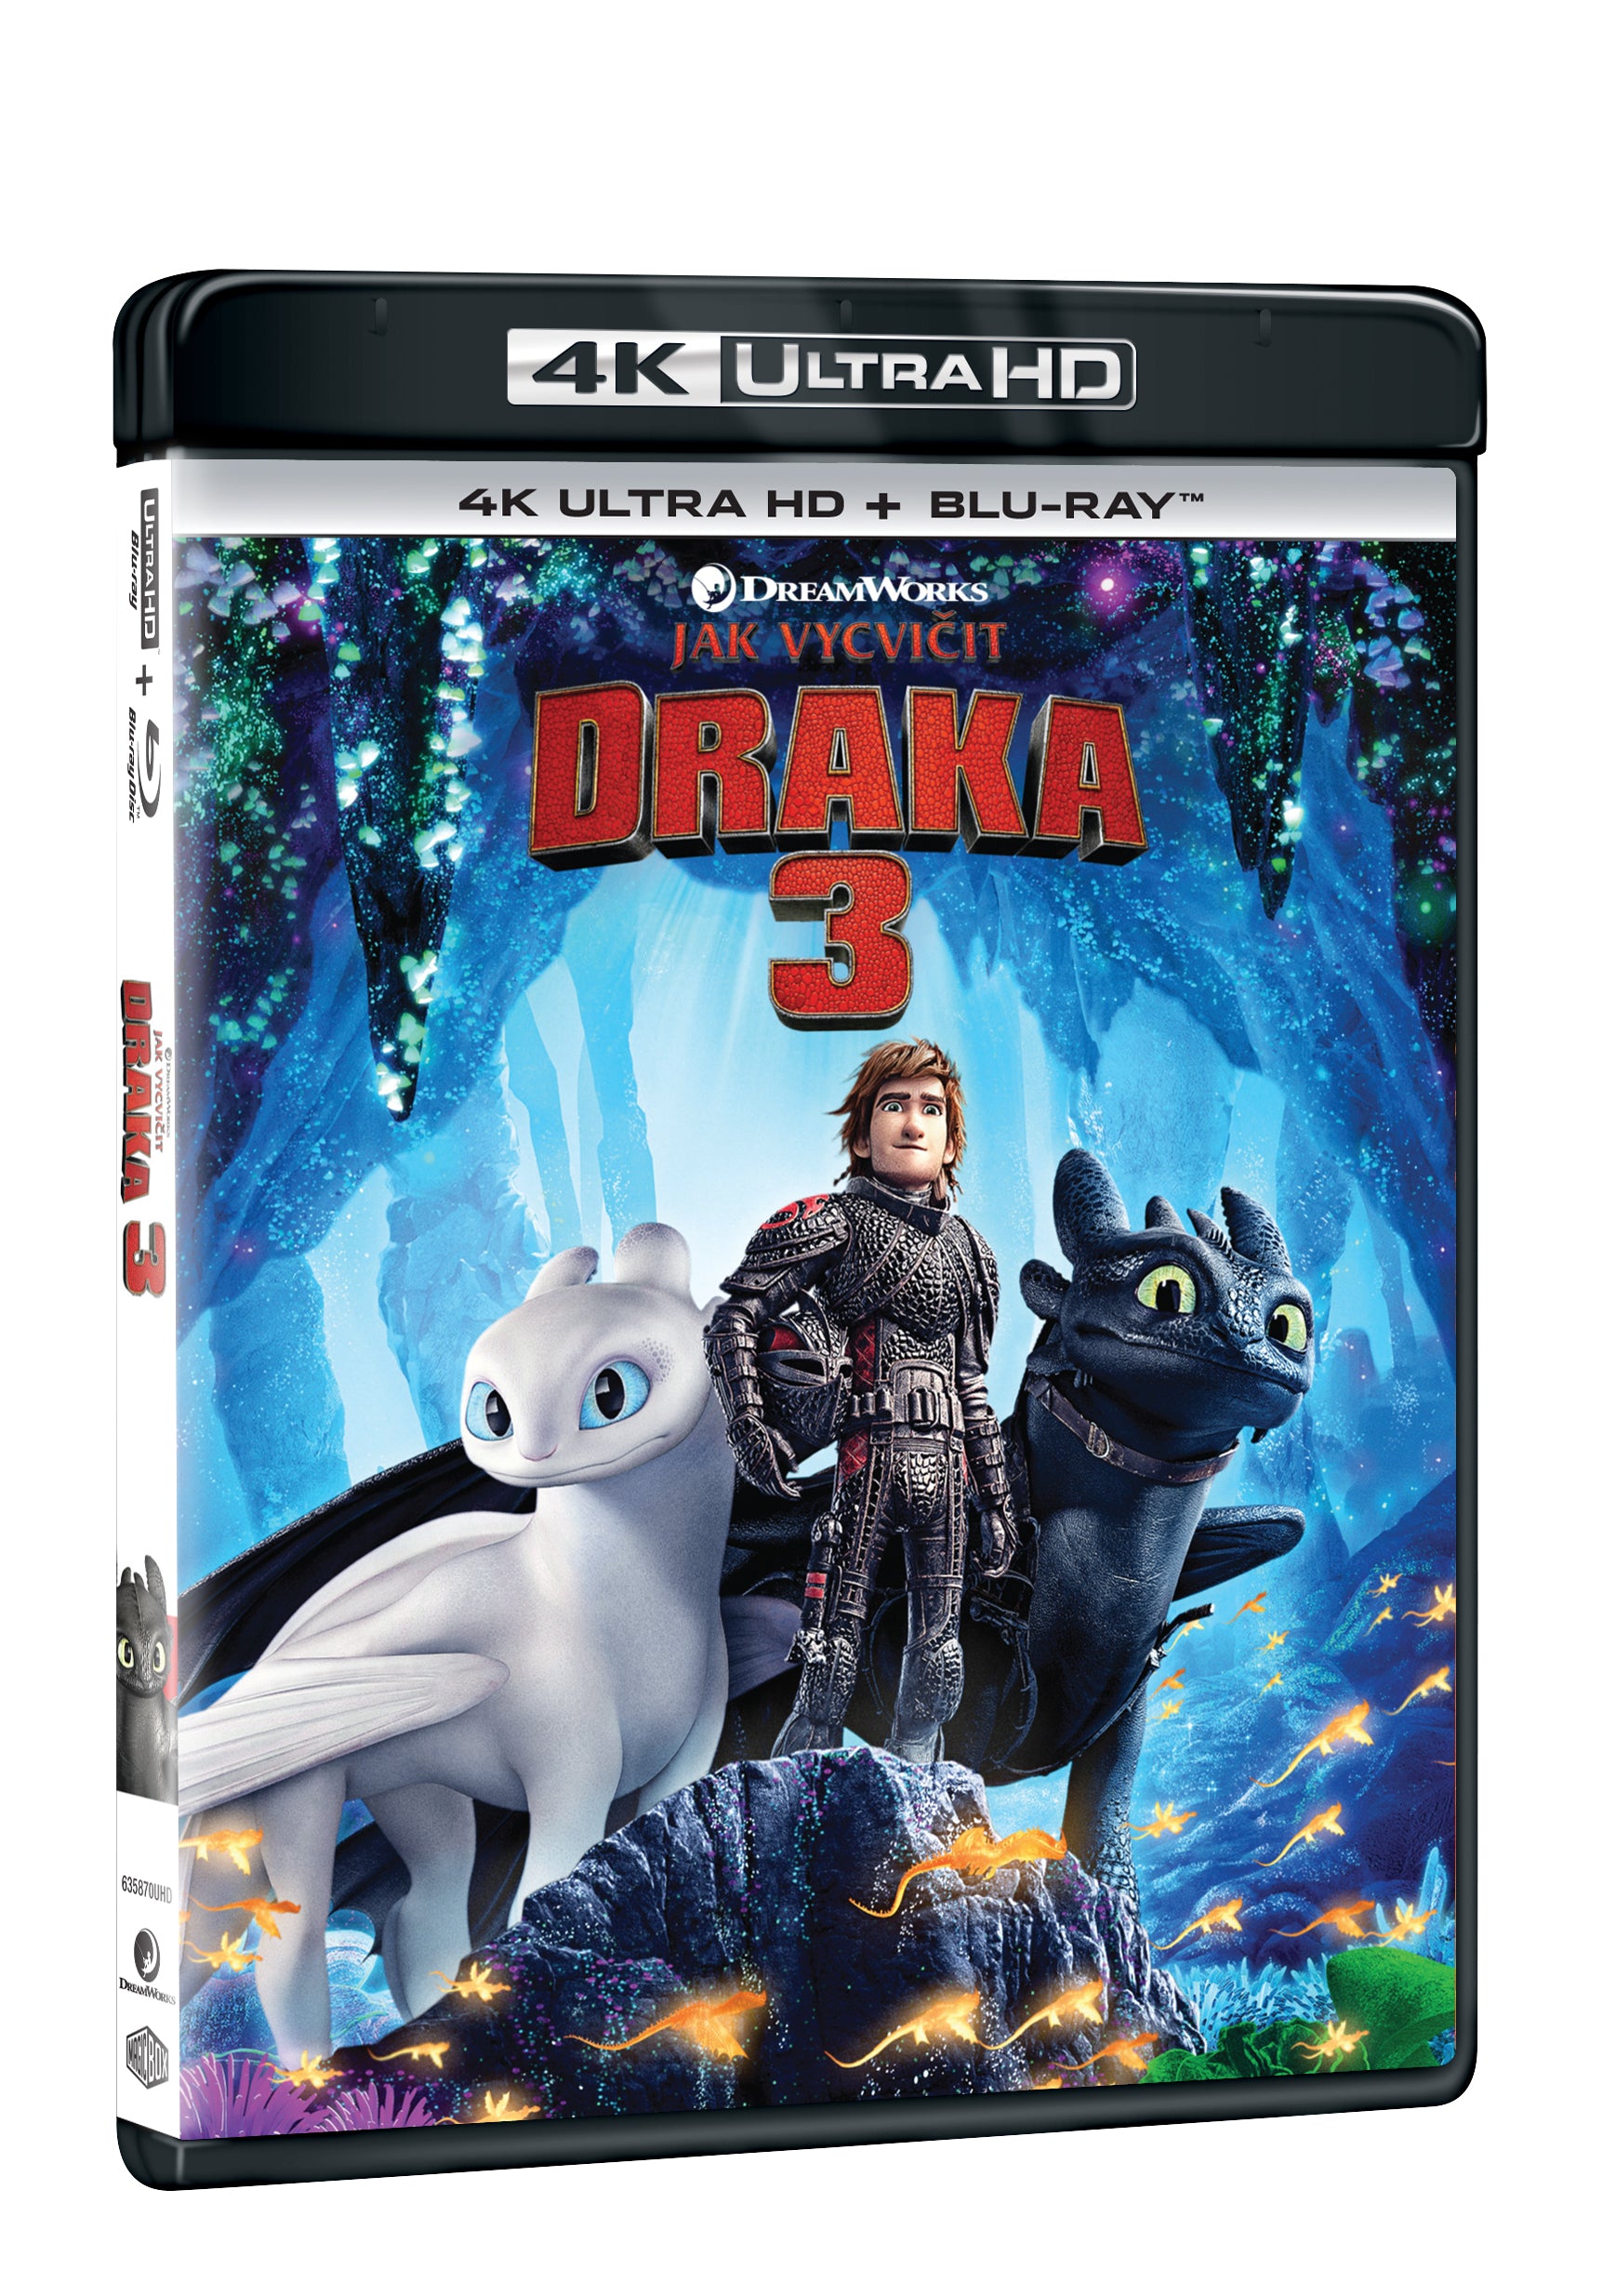 Jak vycvicit draka 3 2BD (UHD+BD) / How to Train Your Dragon: The Hidden World - Czech version